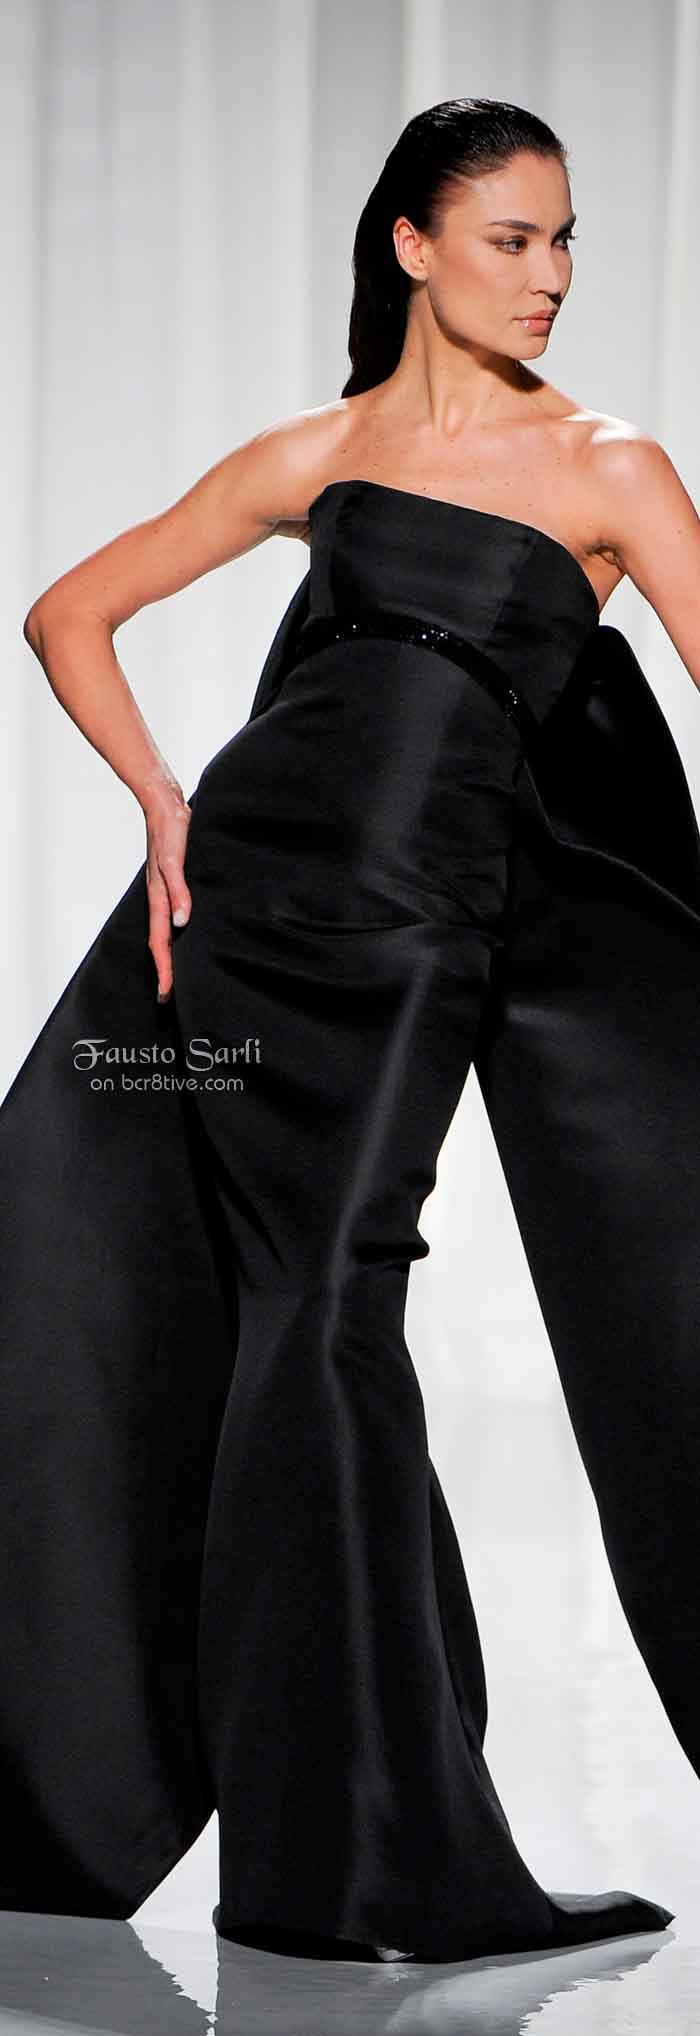 Fausto Sarli Spring Summer 2011 Haute Couture